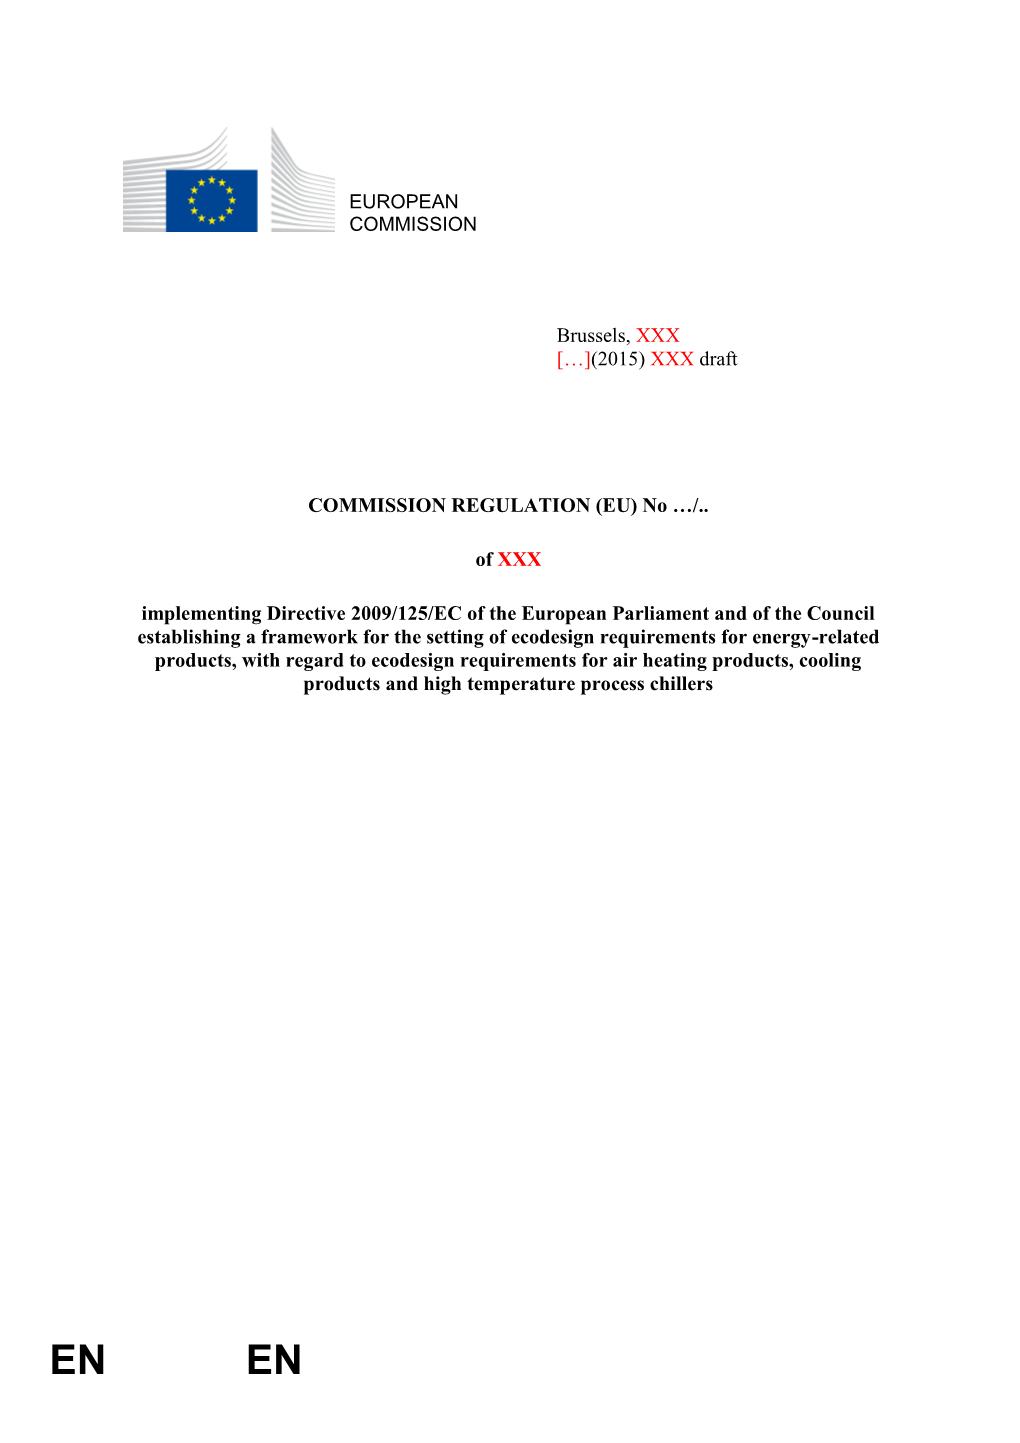 COMMISSION REGULATION (EU) No s3